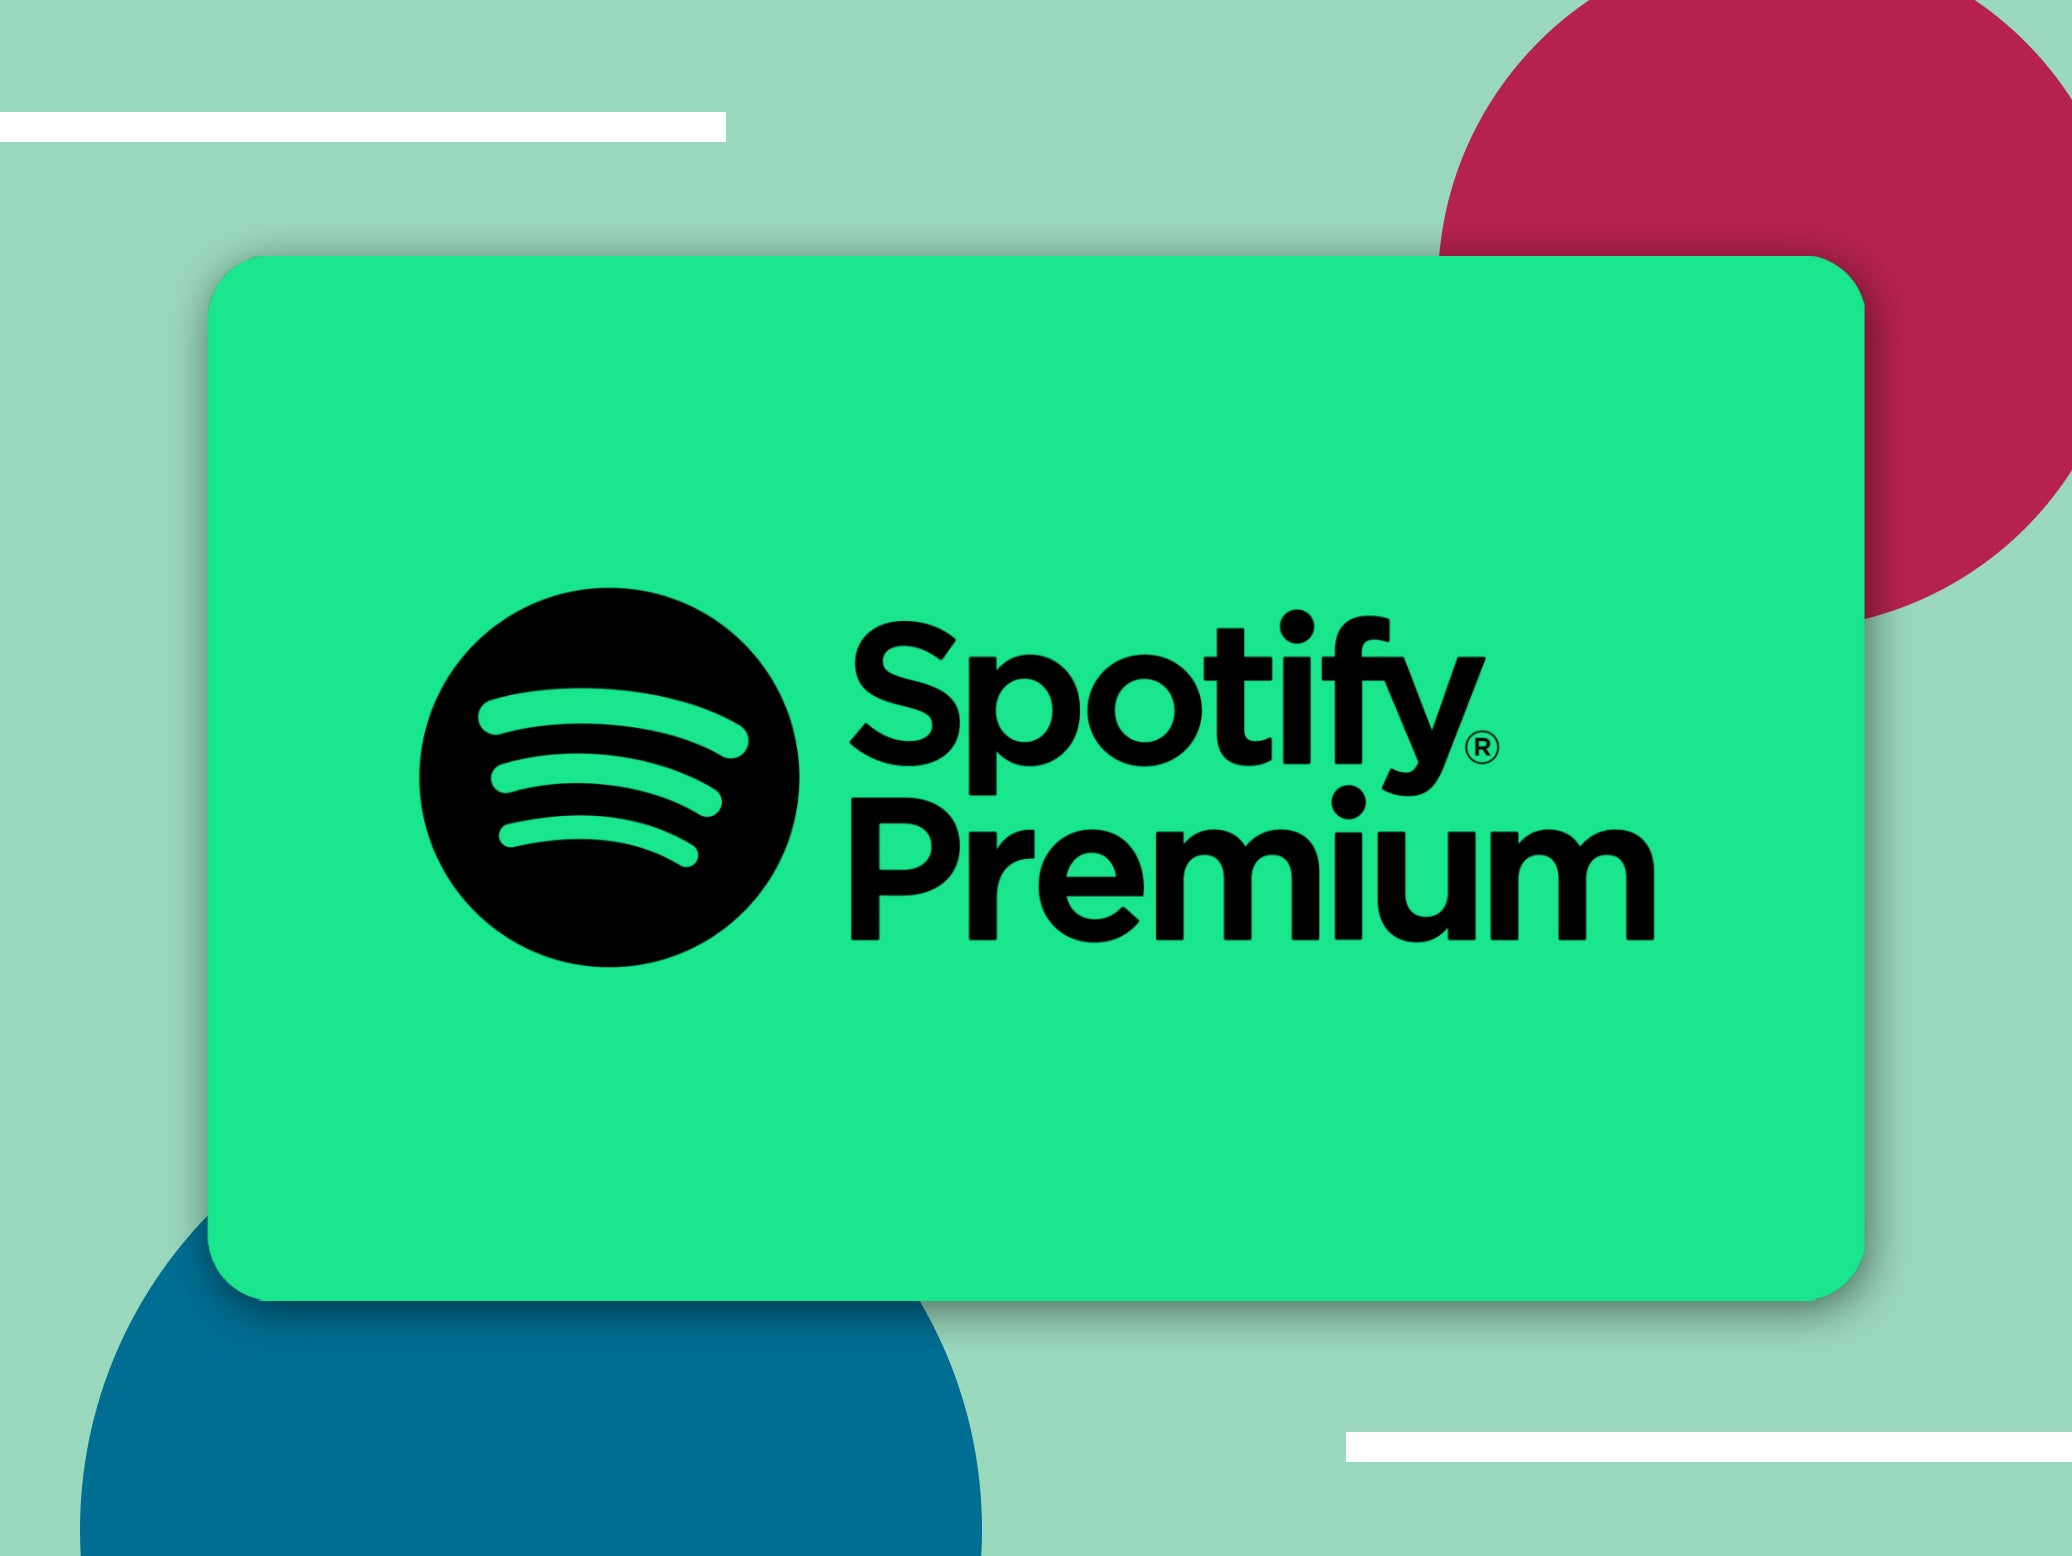 Cancel Spotify Premium